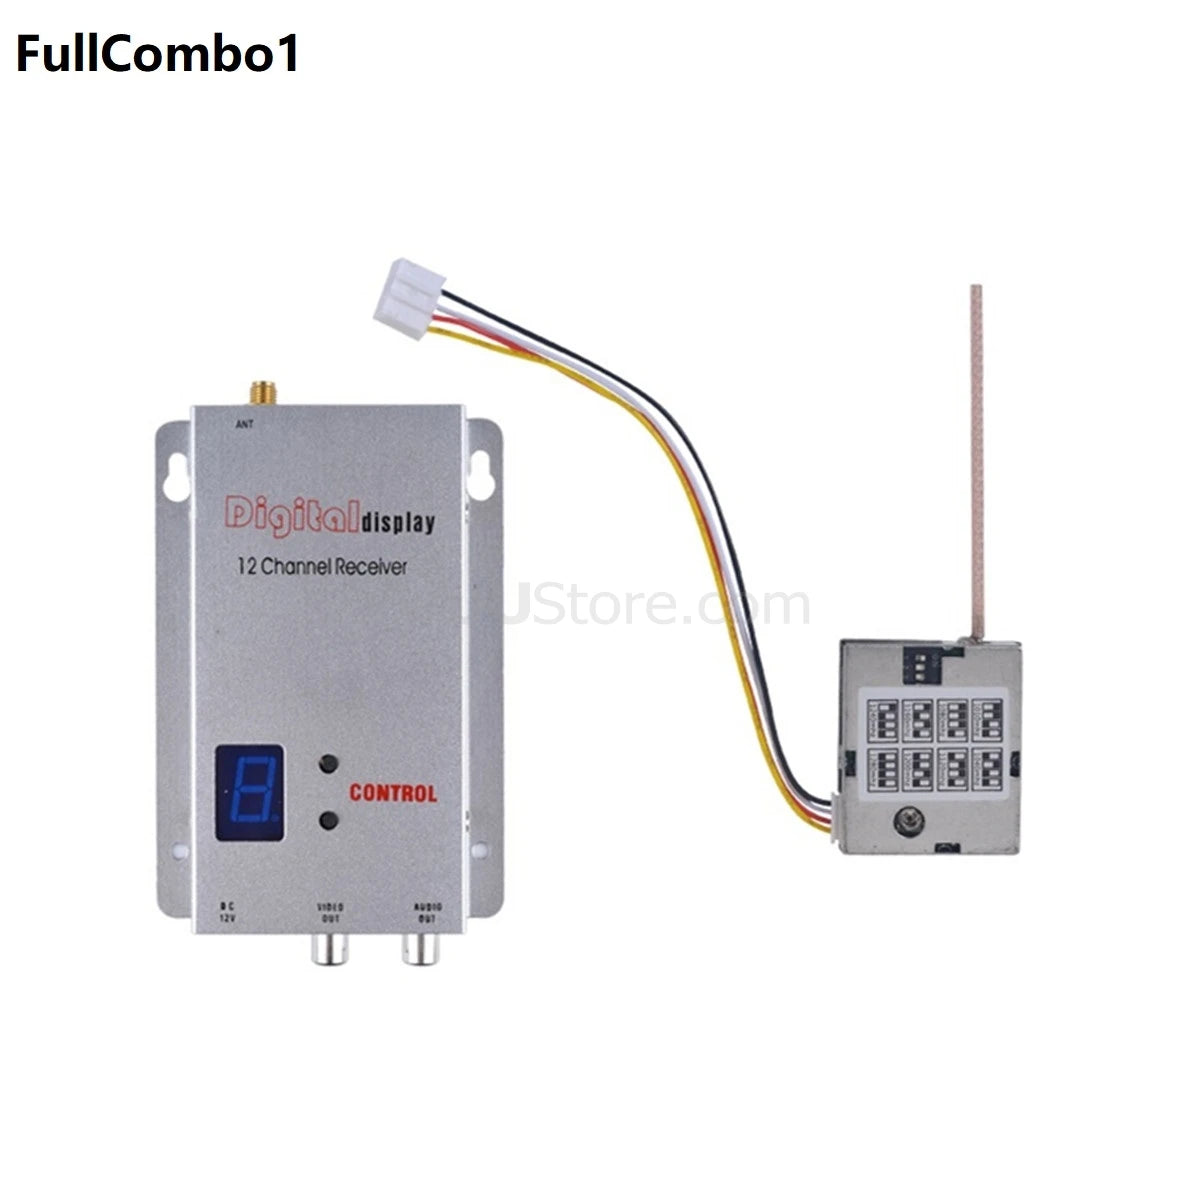 1.2G 200mW Transmitter, FullCombo1 Digitaldisplay 12 Chonnel Receiver UStore-d T CON